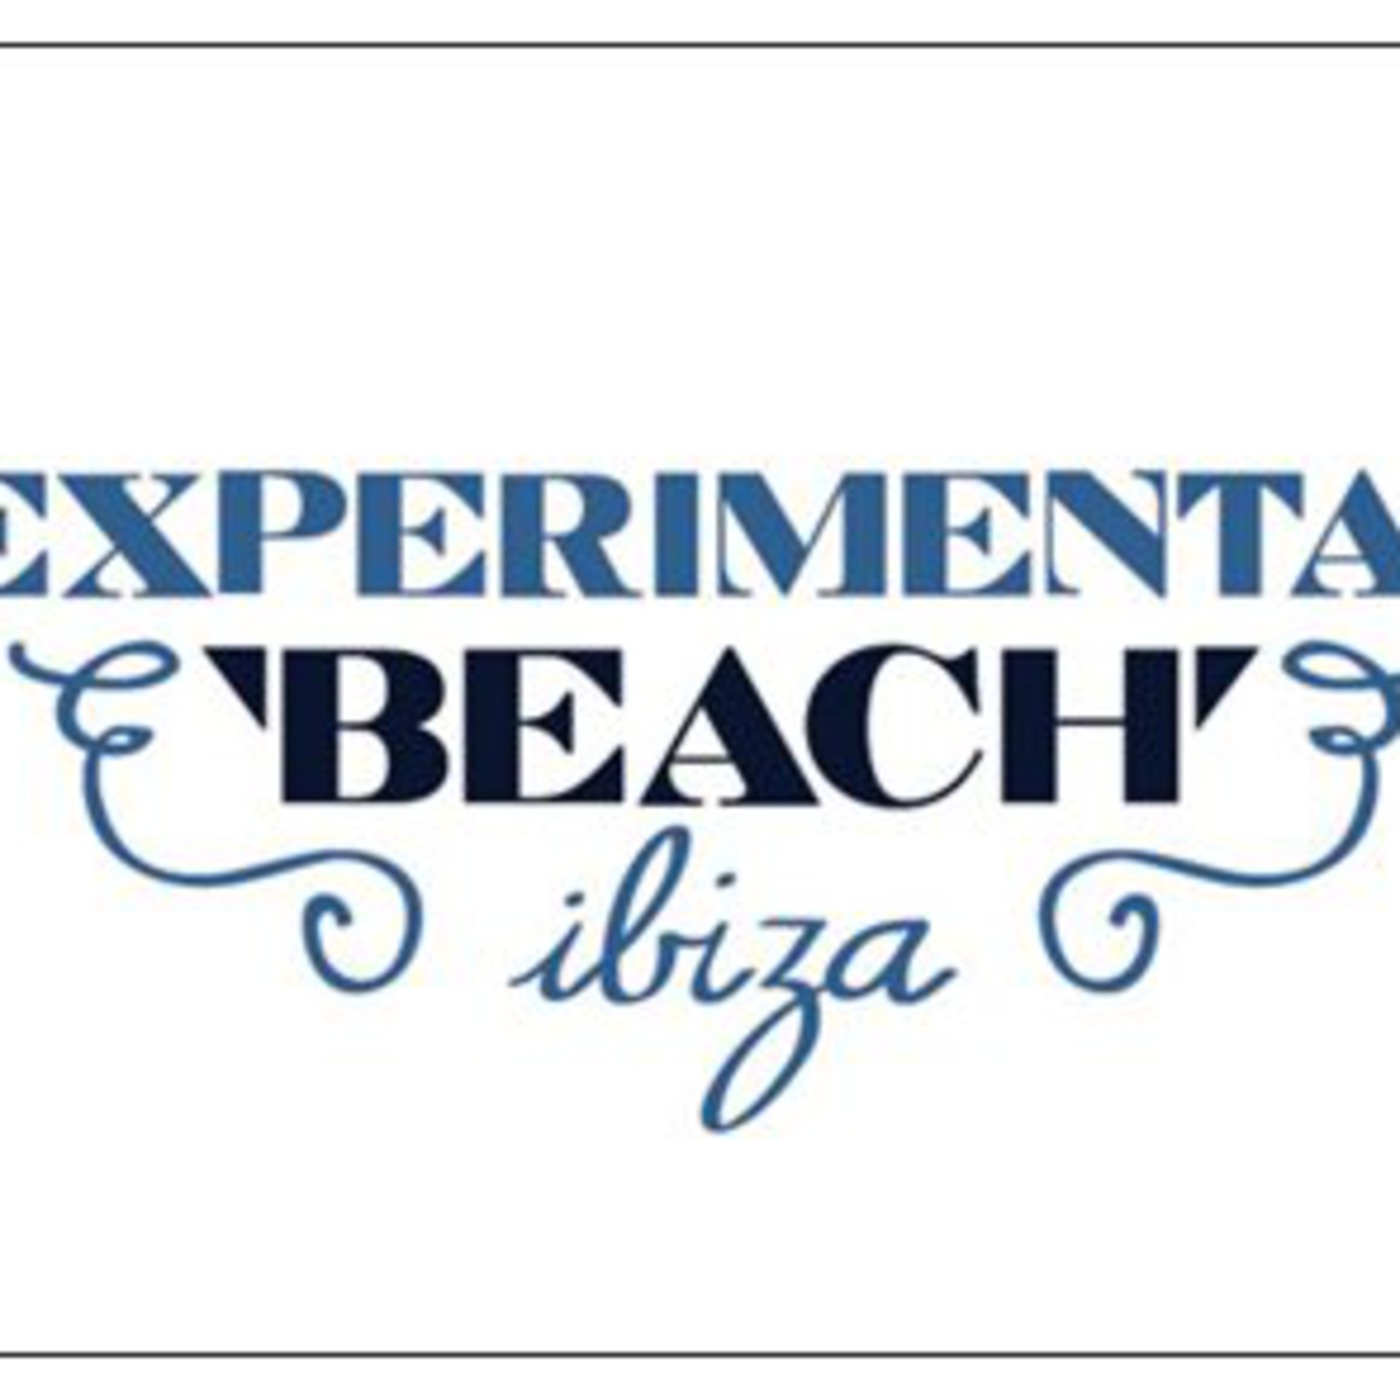 EXPERIMENTAL BEACH IBIZA PODCAST by LLEO